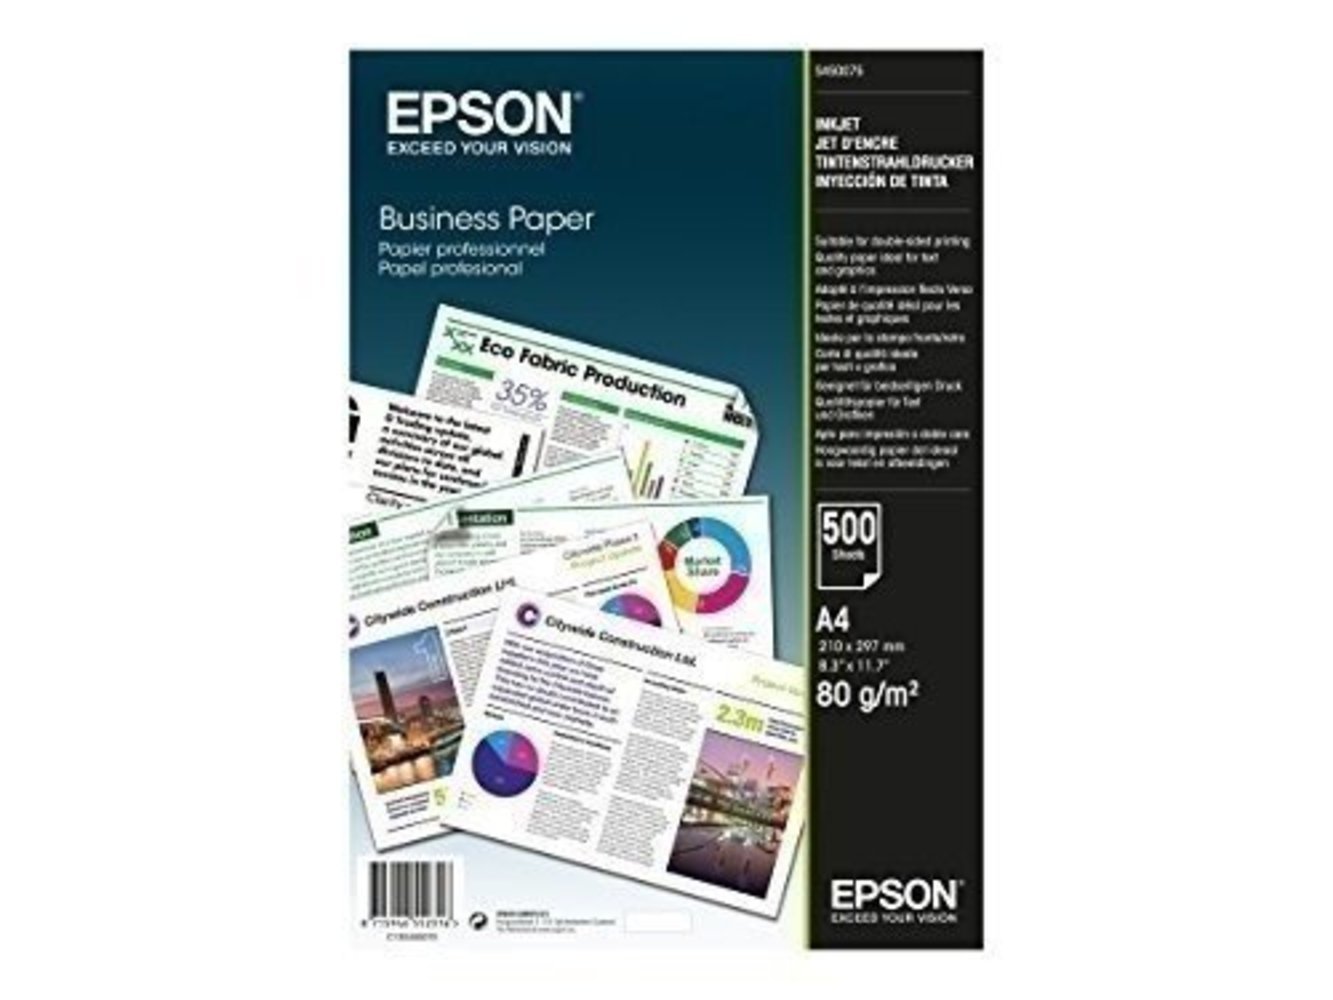  Produkttitel: Hochwertiges Epson Business Papier - 80gsm - 500 Blatt